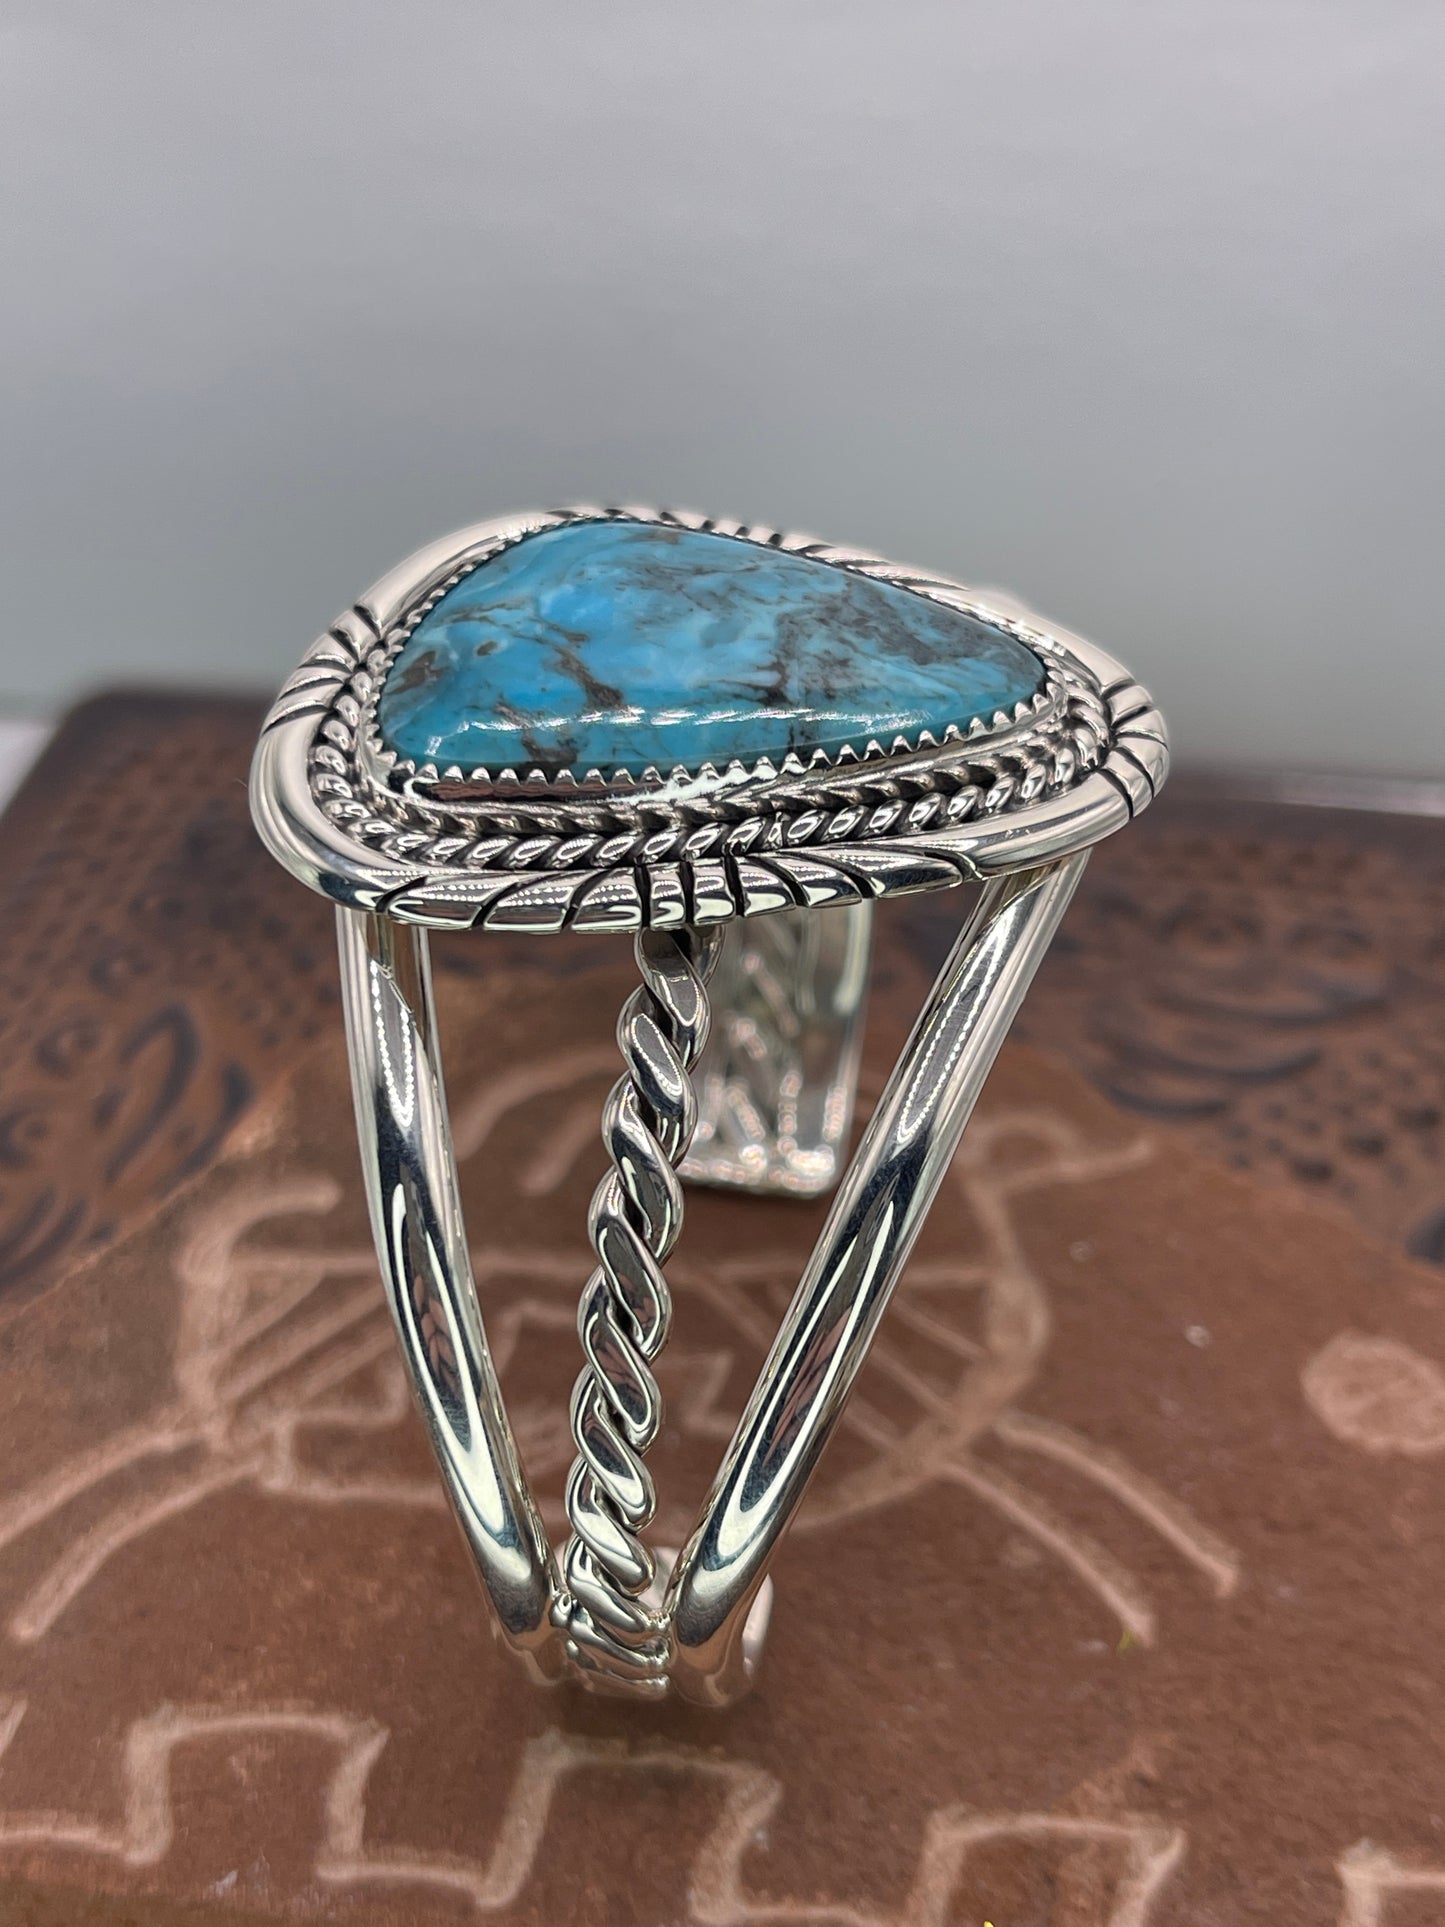 Desert Treasure: Kingman Turquoise Cuff Bracelet